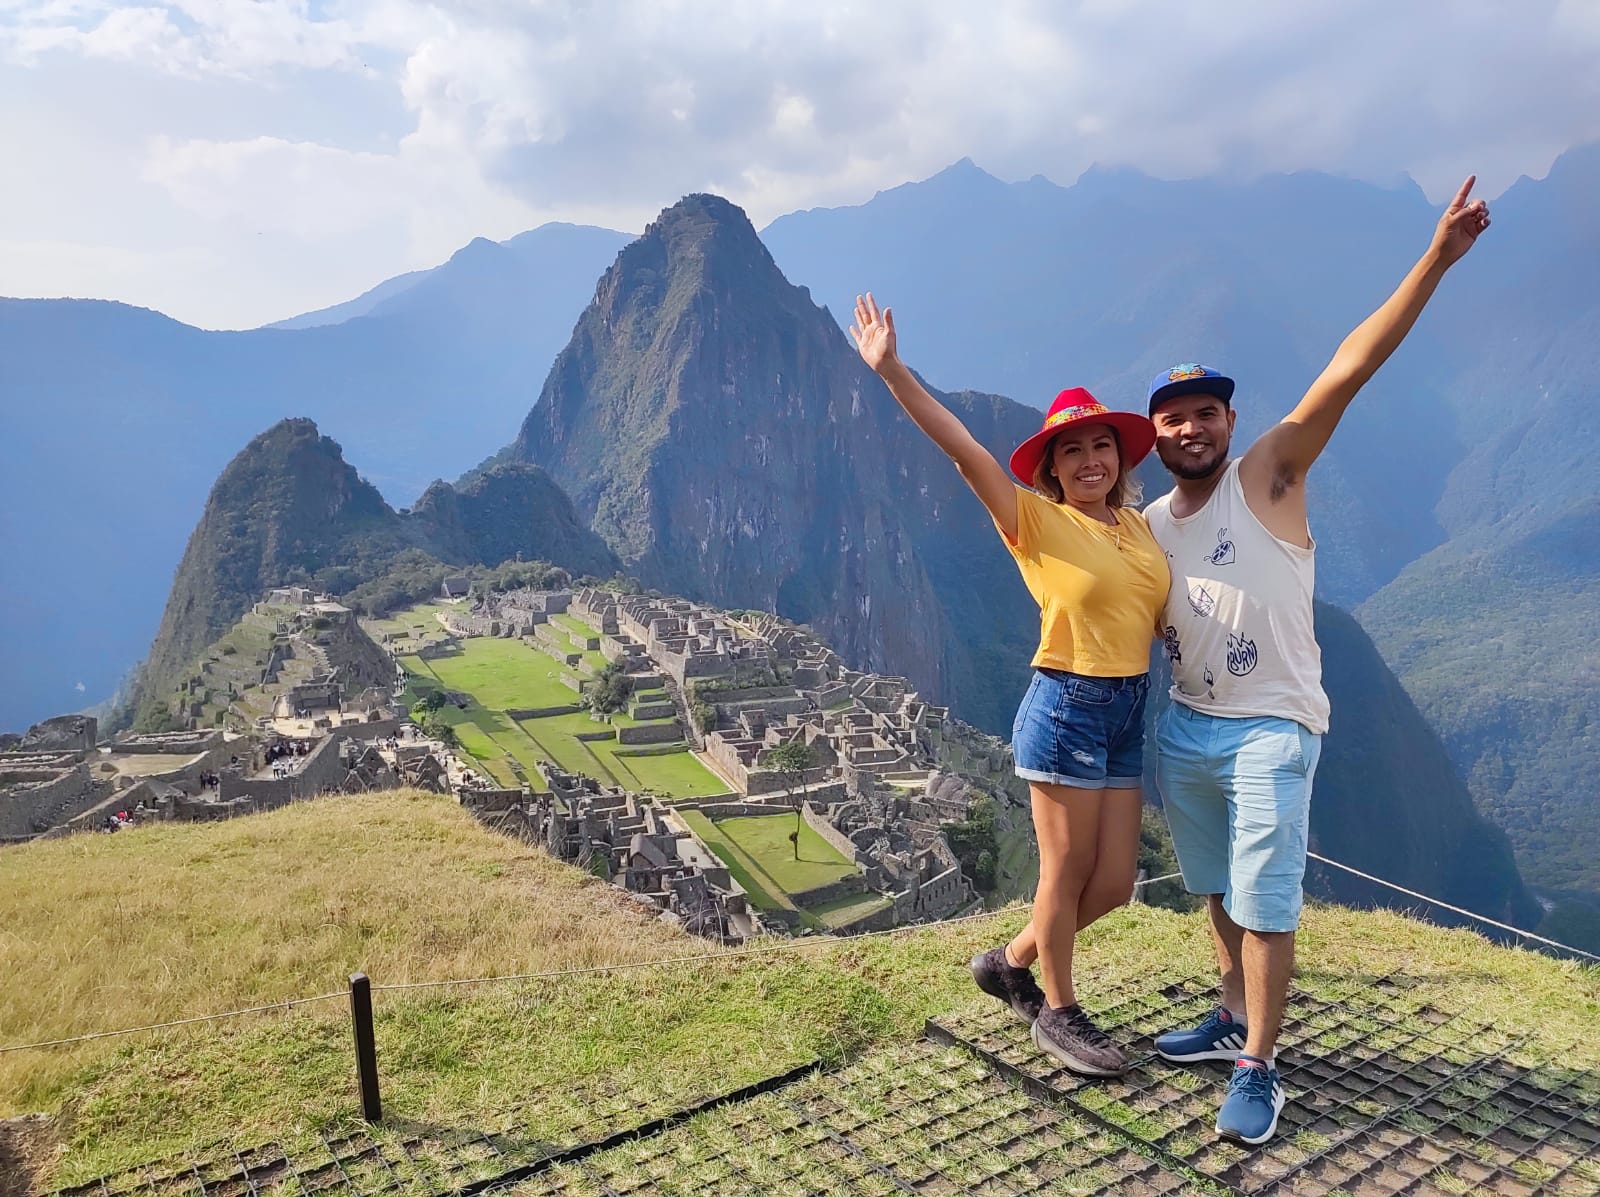 Tour A Peru Machu Picchu, Info Guía Y - Boletos De Ingreso A Machupicchu - , Precio - Valor Entrada A Machu Picchu, Y Guía, Cuánto Cuesta Ir A Machu Picchu